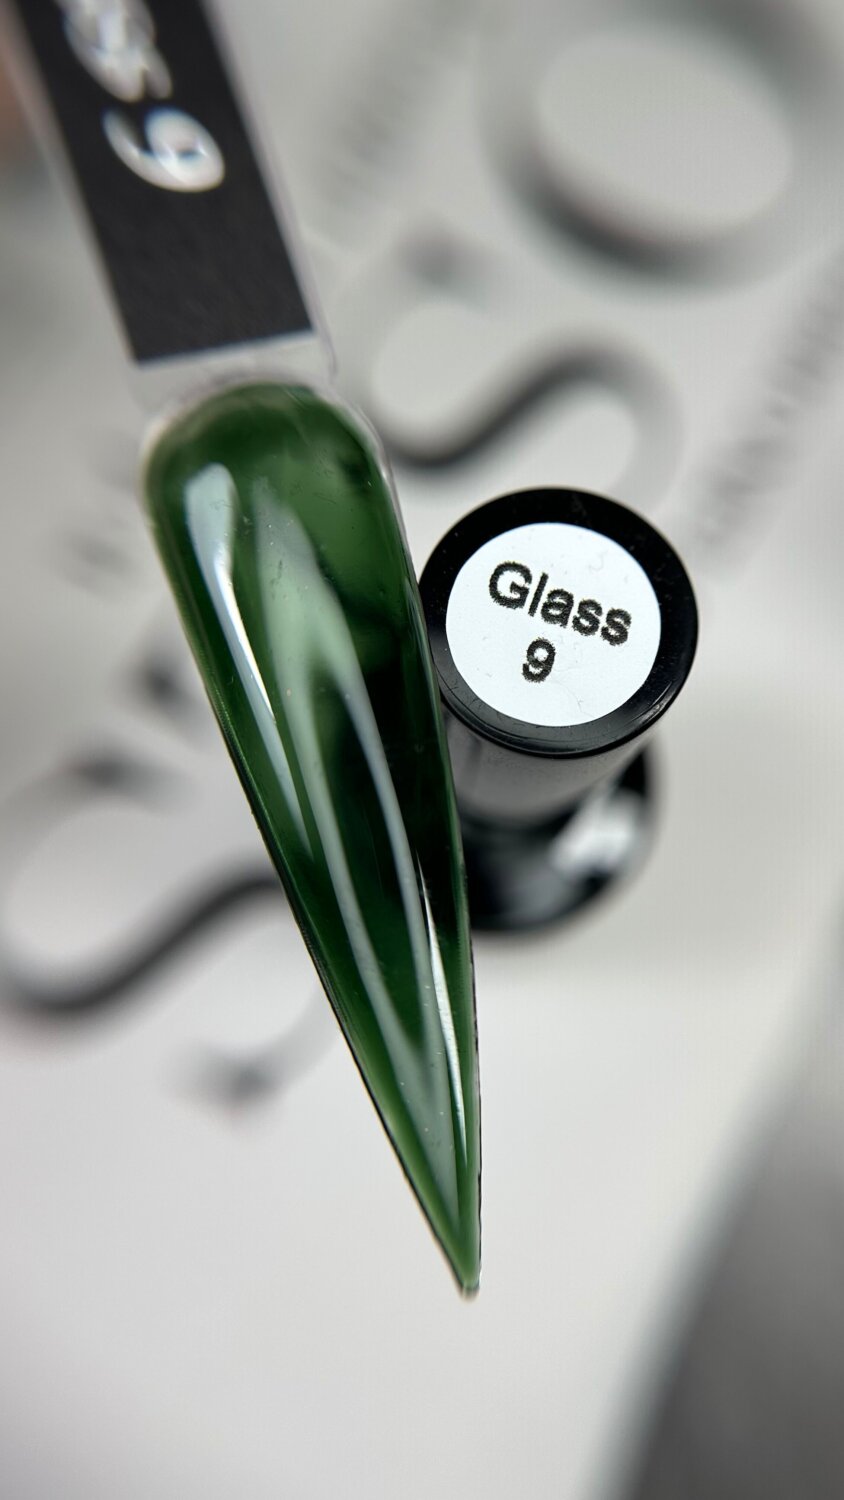 Гель-лак Lakres Glass 9, 9 мл